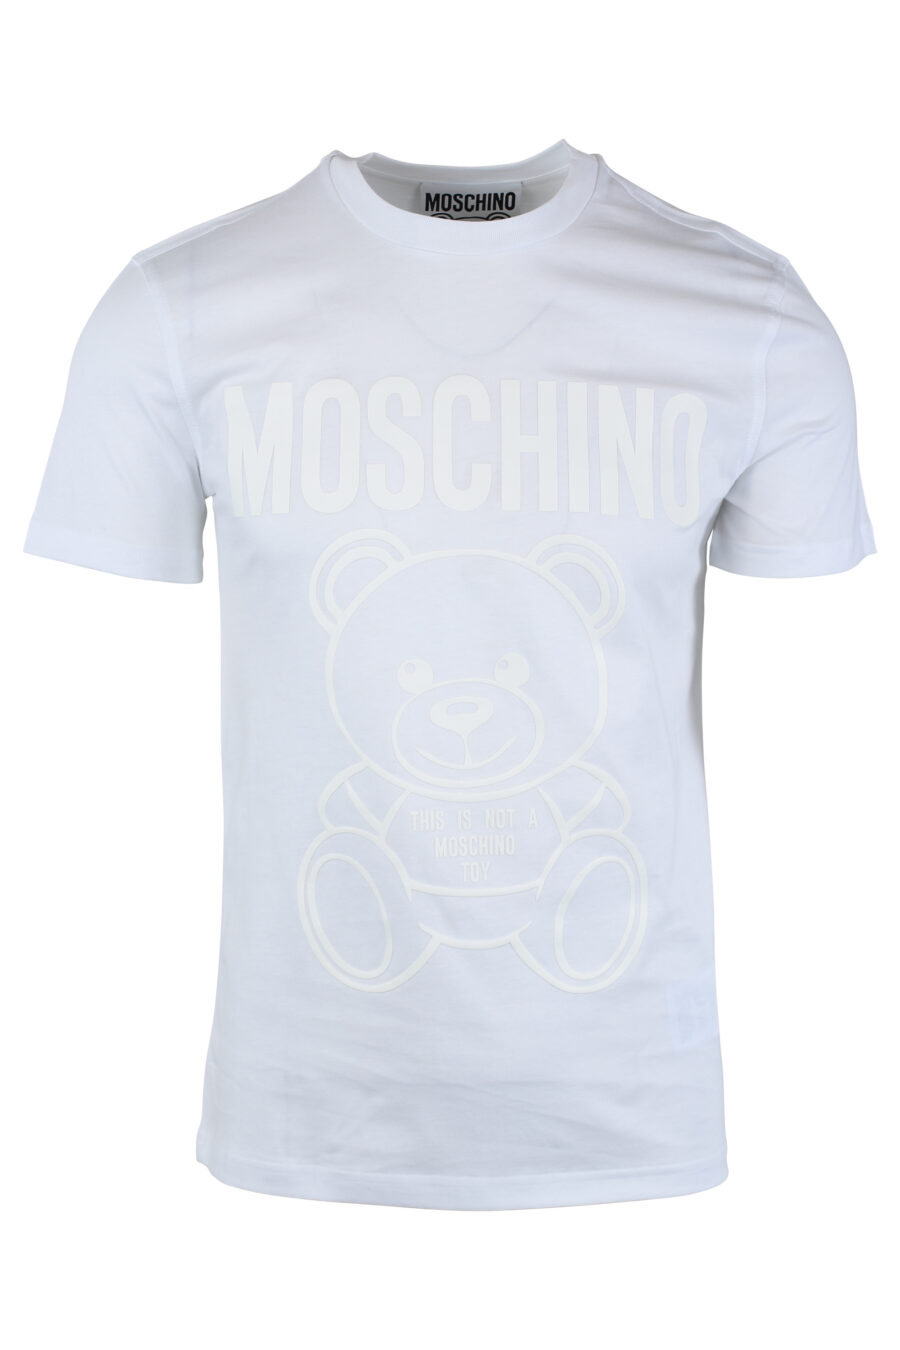 White T-shirt with monochrome bear maxilogo - IMG 1657